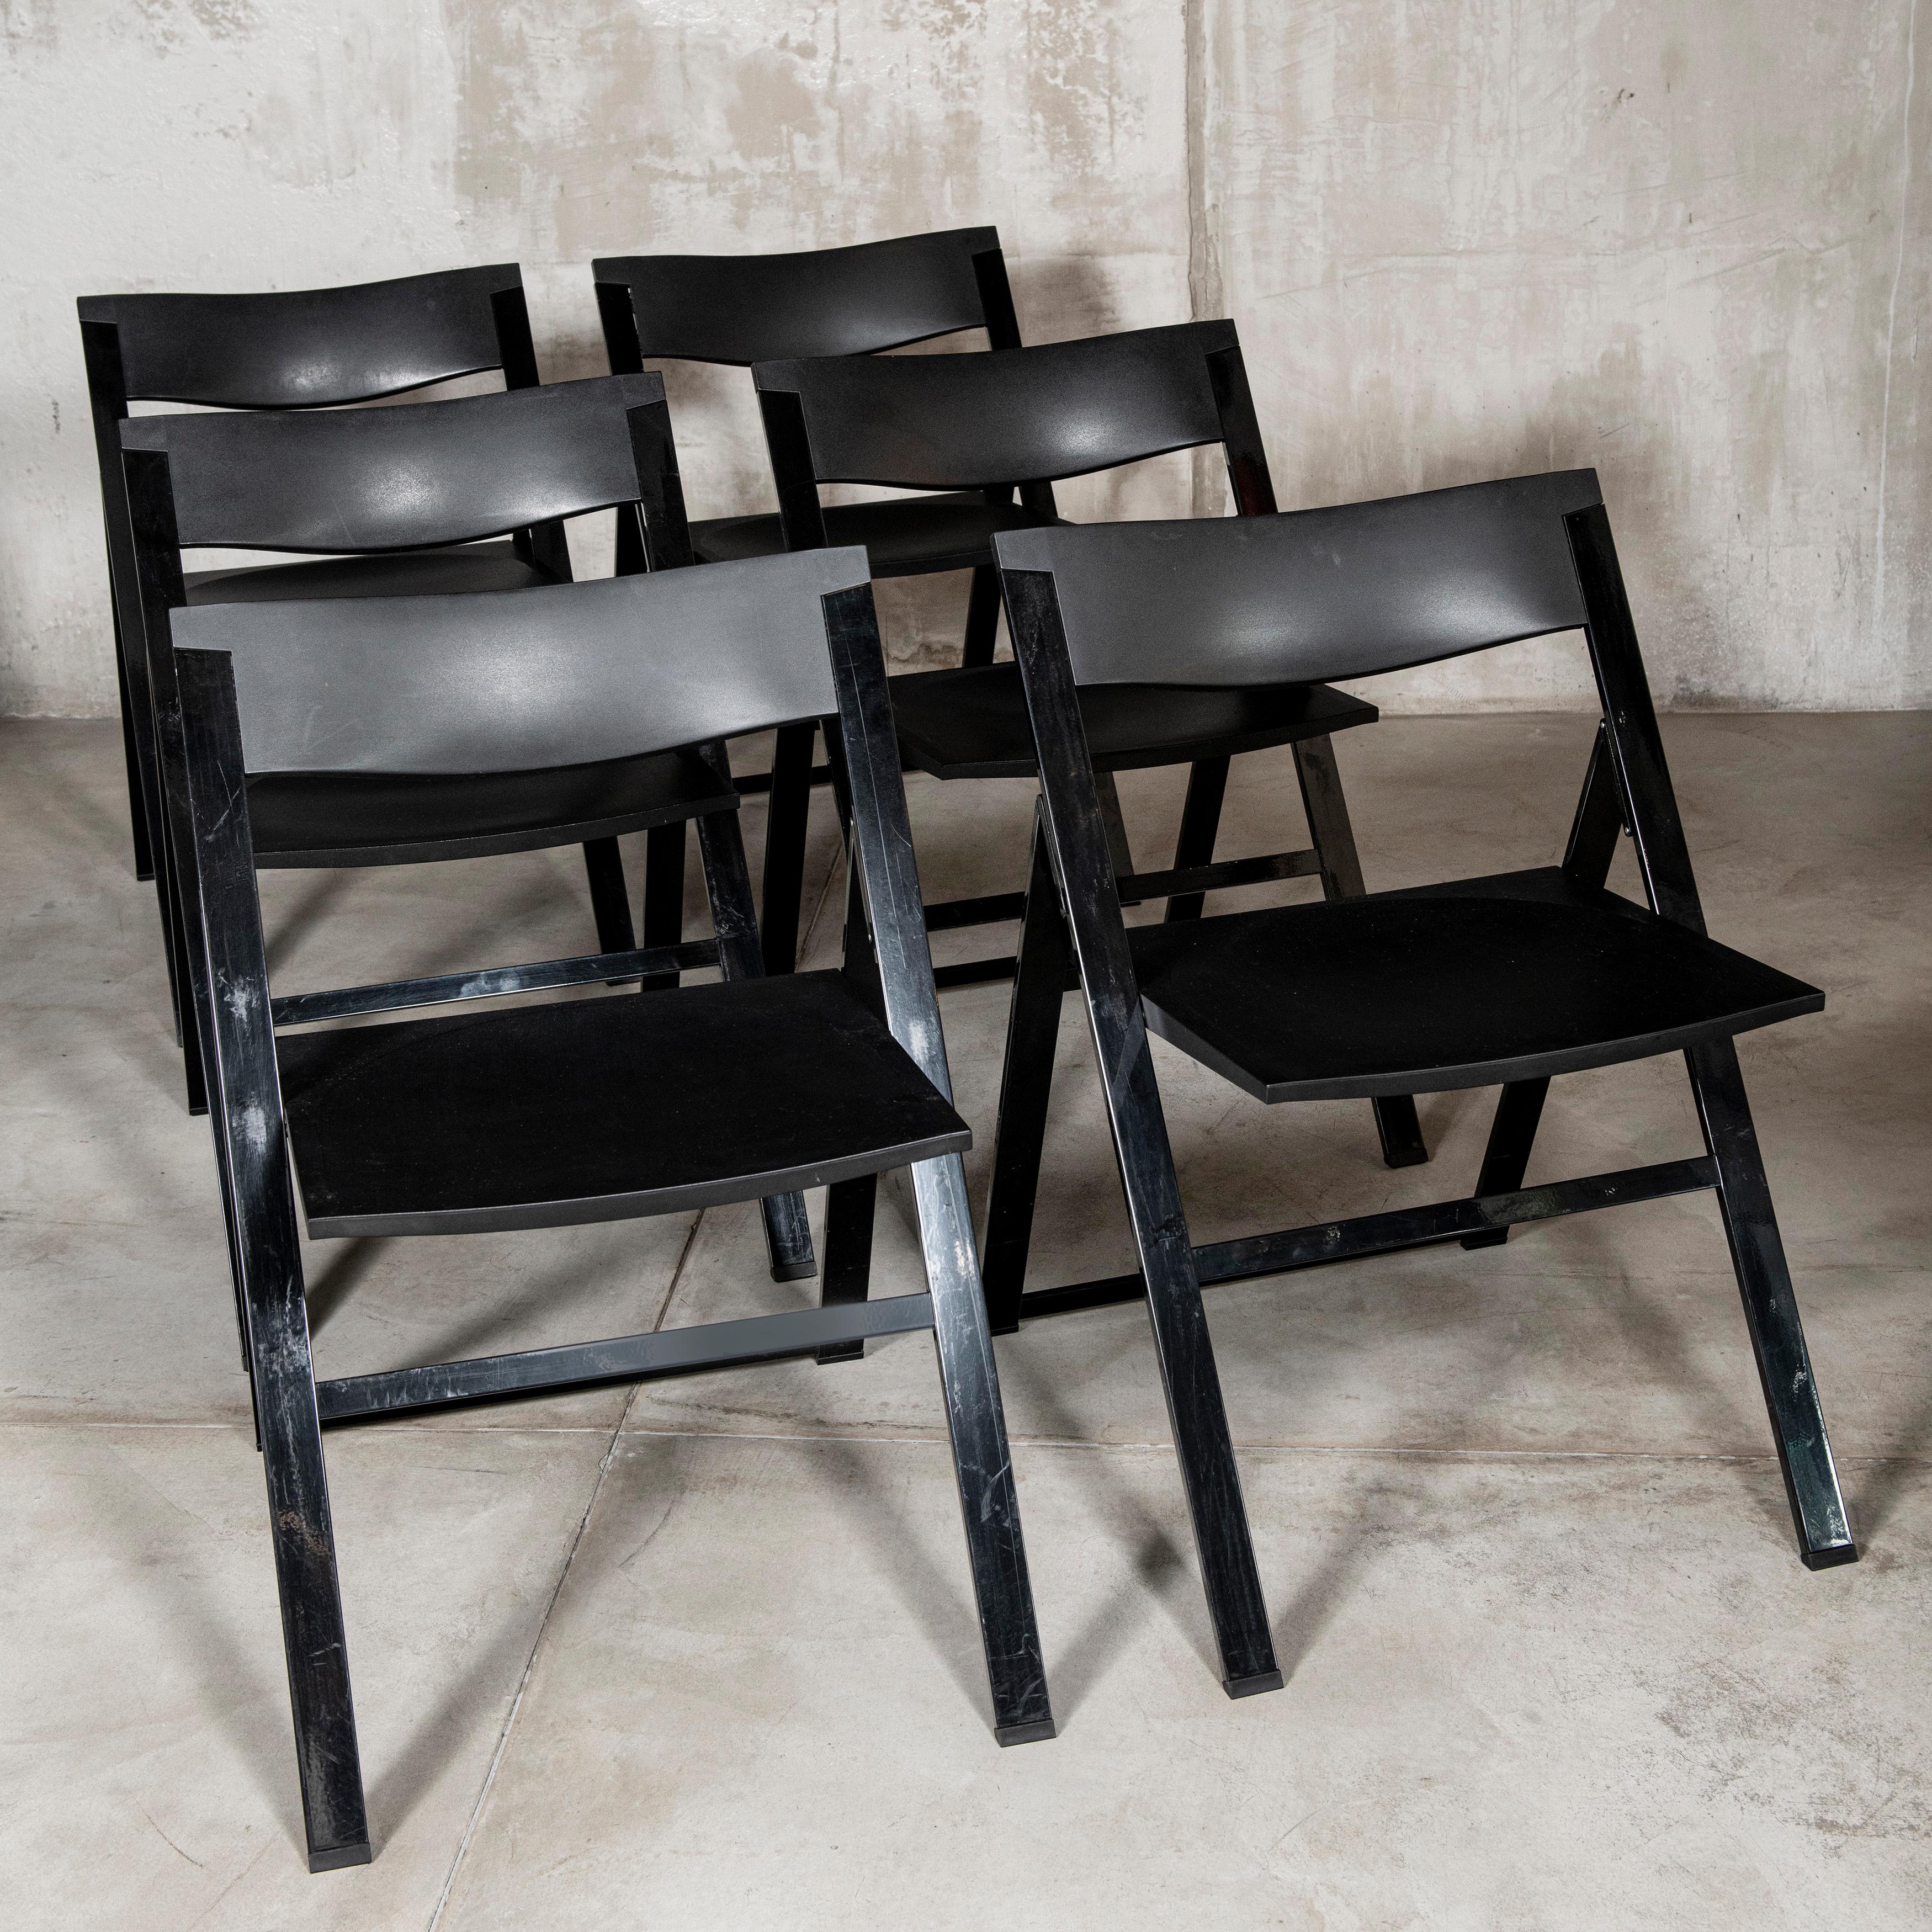 Set of six folding chairs by Justus Kolberg for Tecno. Italy, circa 1990.
Model P08.